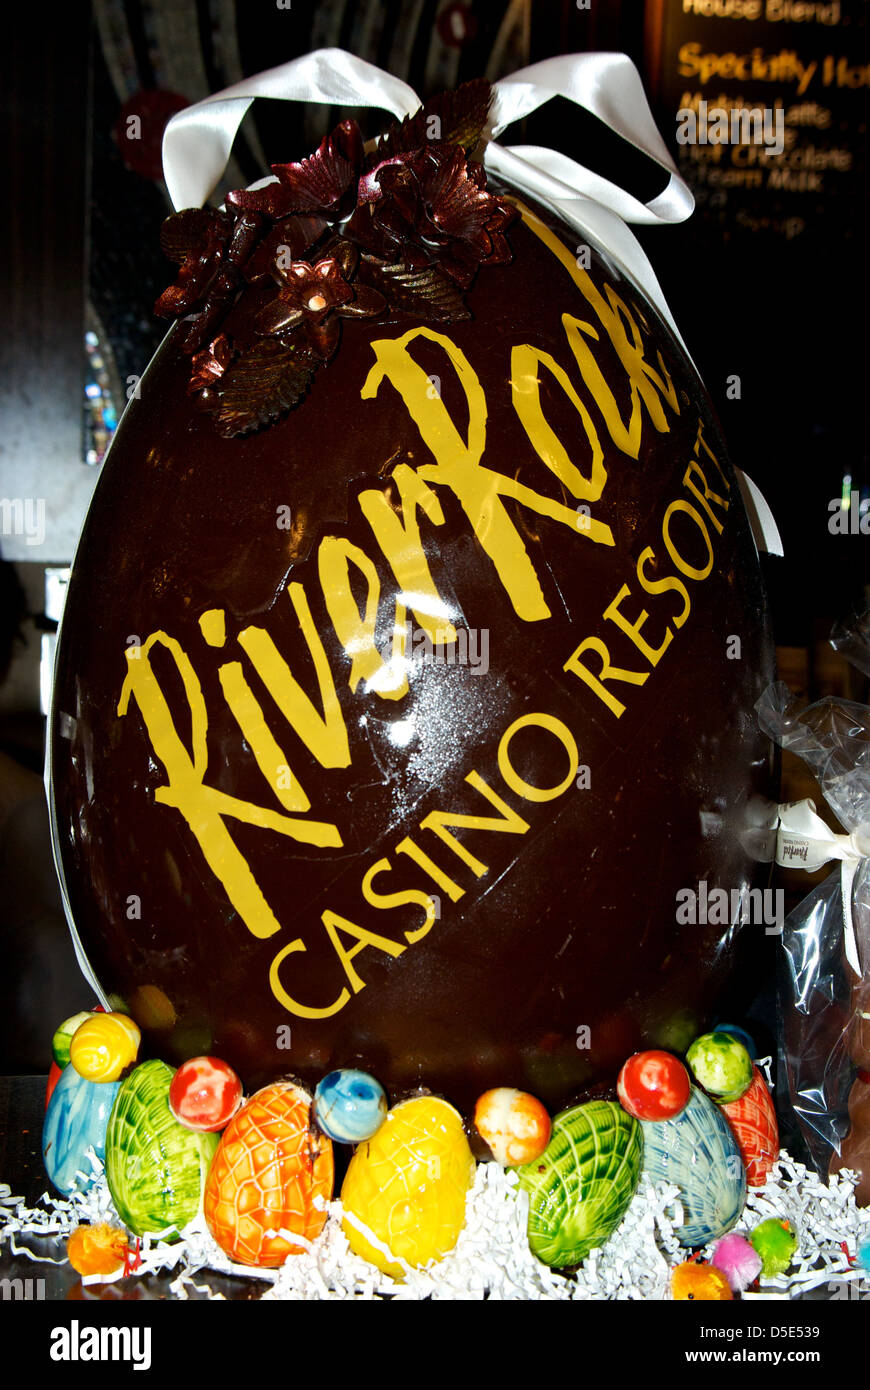 Riese dekoriert dunkle Schokolade Osterei River Rock Casino Resort in Richmond BC Kanada Stockfoto